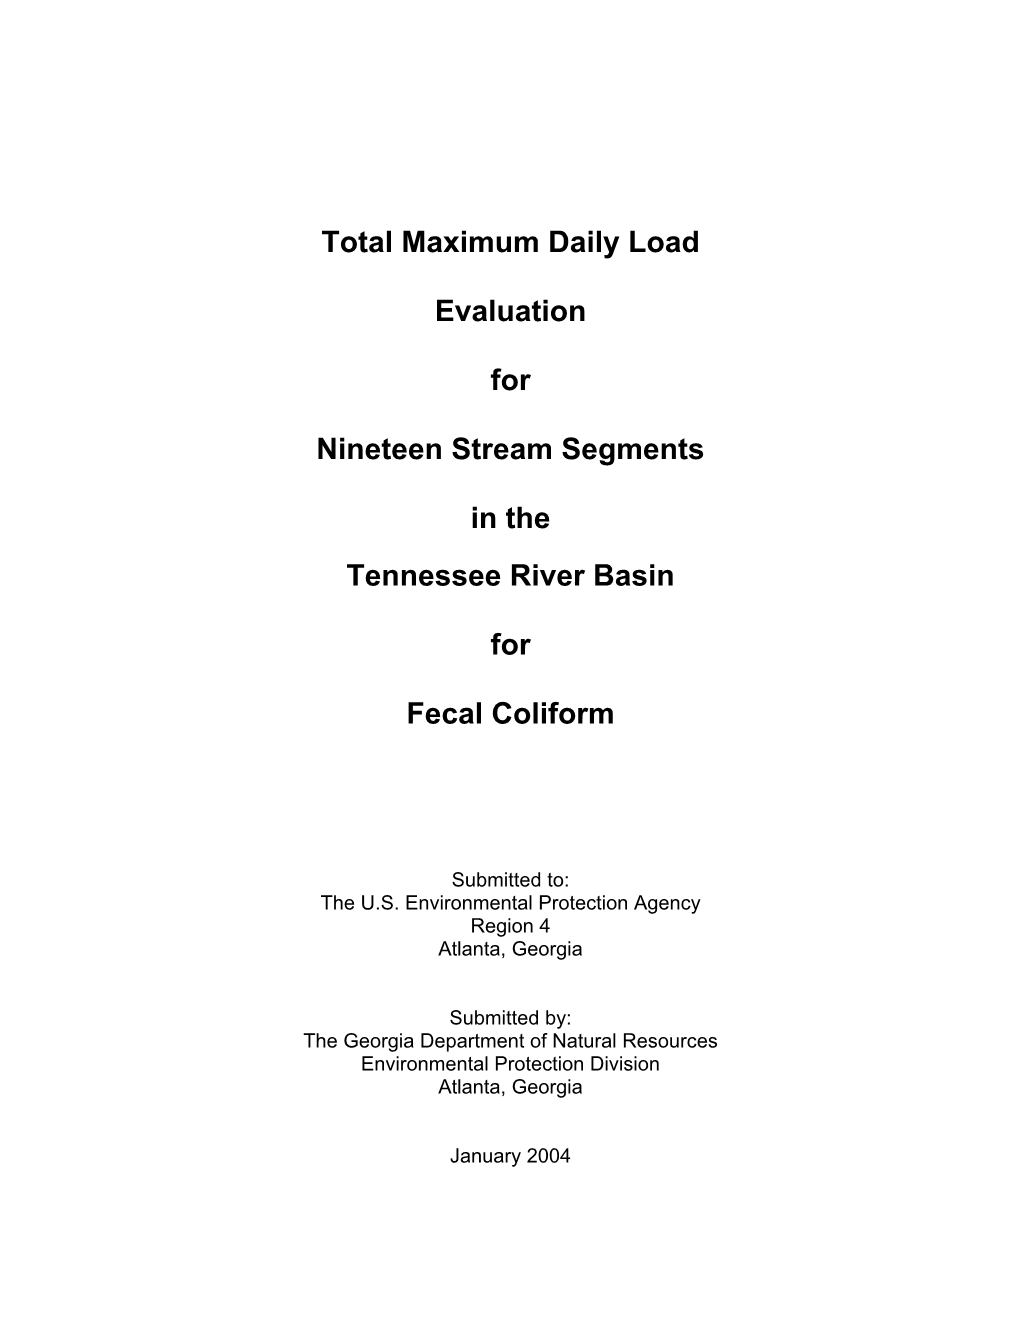 Fecal Coliform TMDL Report